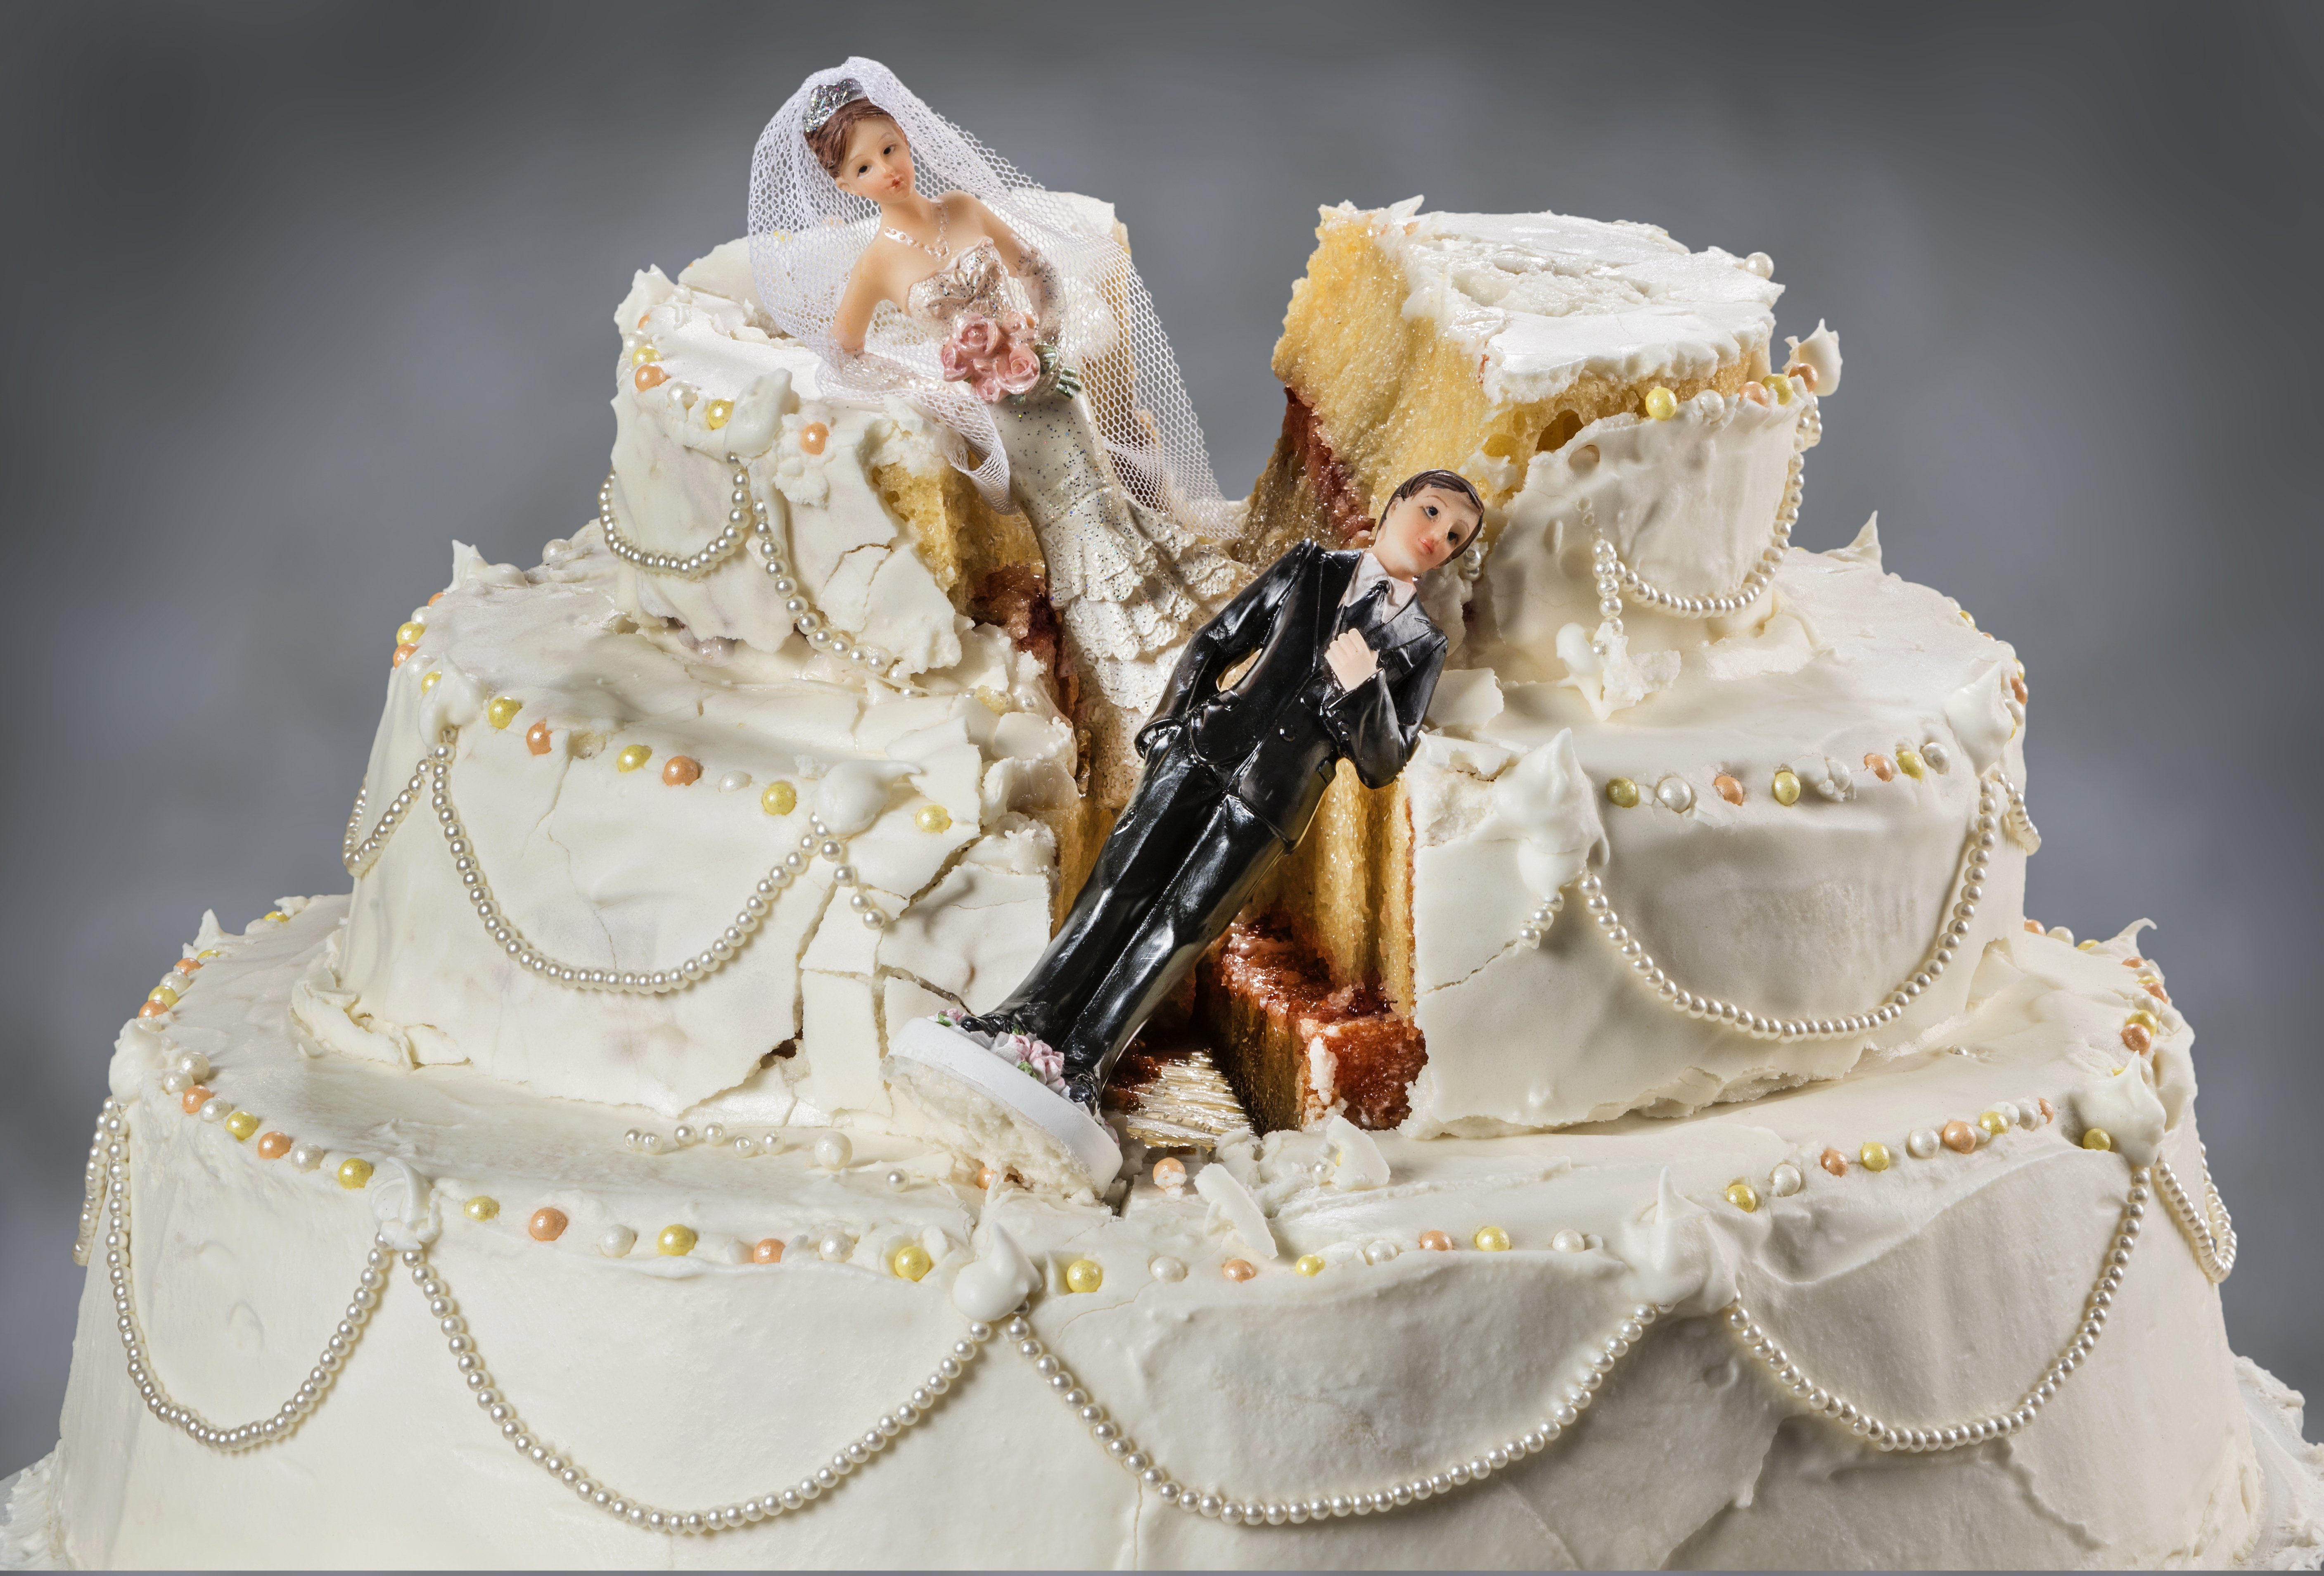 Torta de bodas arruinada. | Foto: Shutterstock